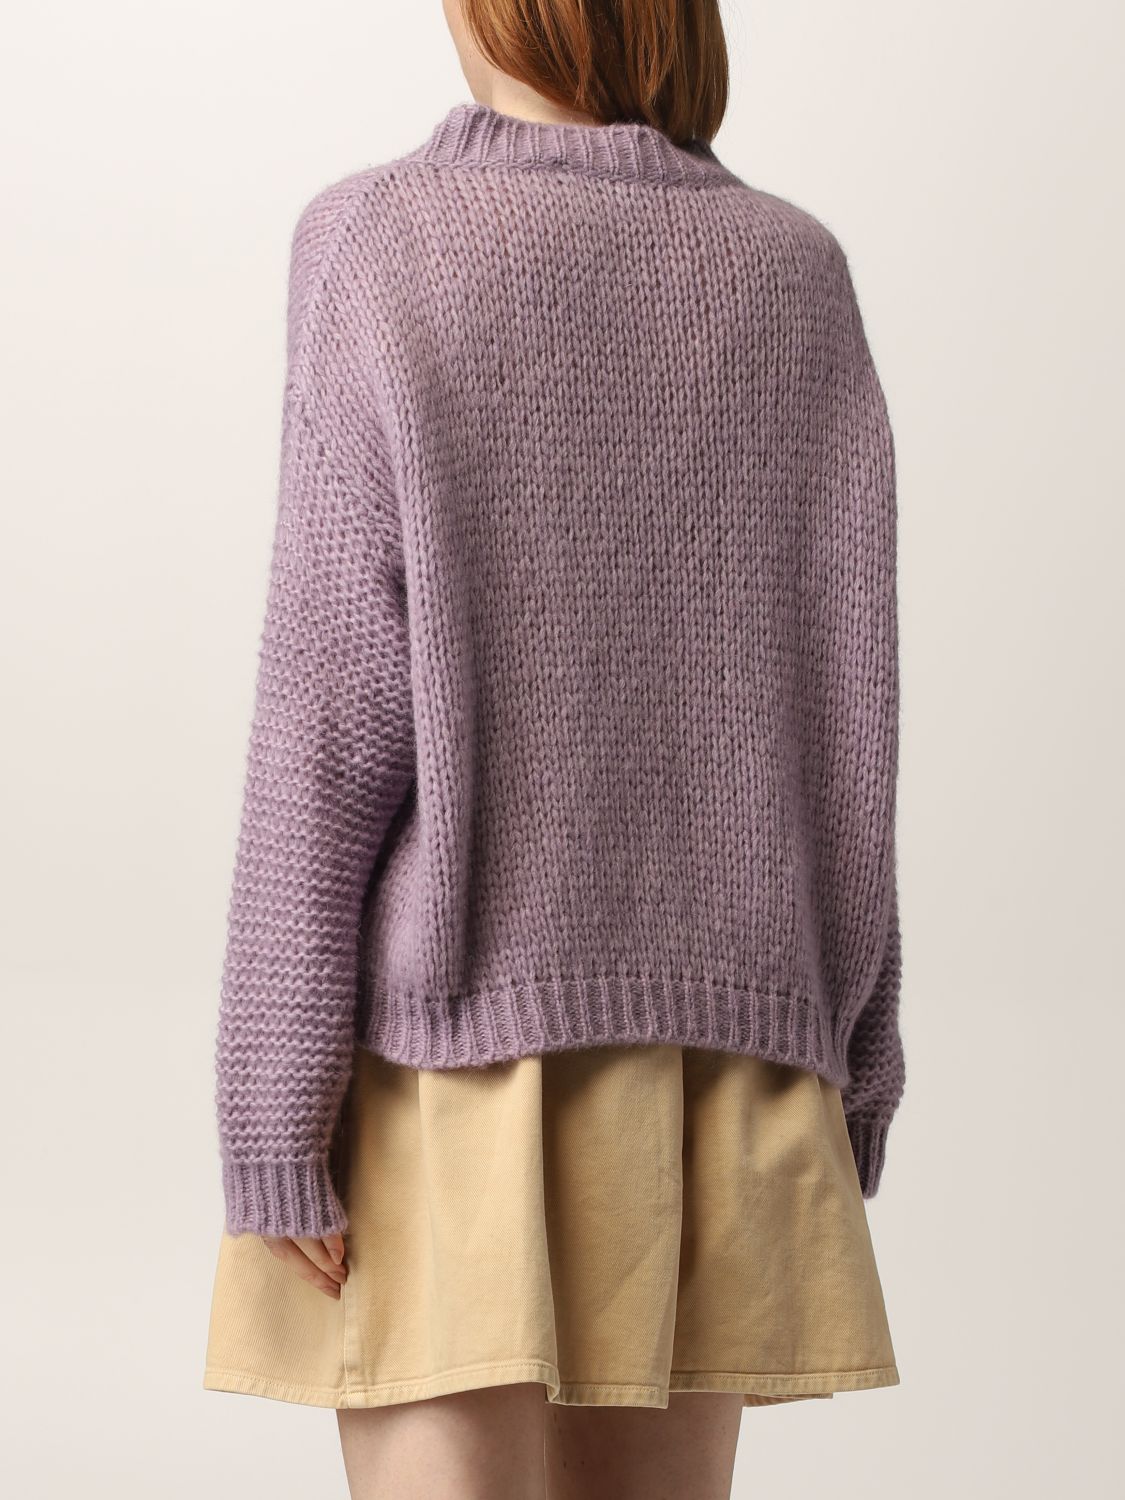 Pullover Roberto Collina en coloris Violet Femme Vêtements Sweats et pull overs Pulls sans manches 